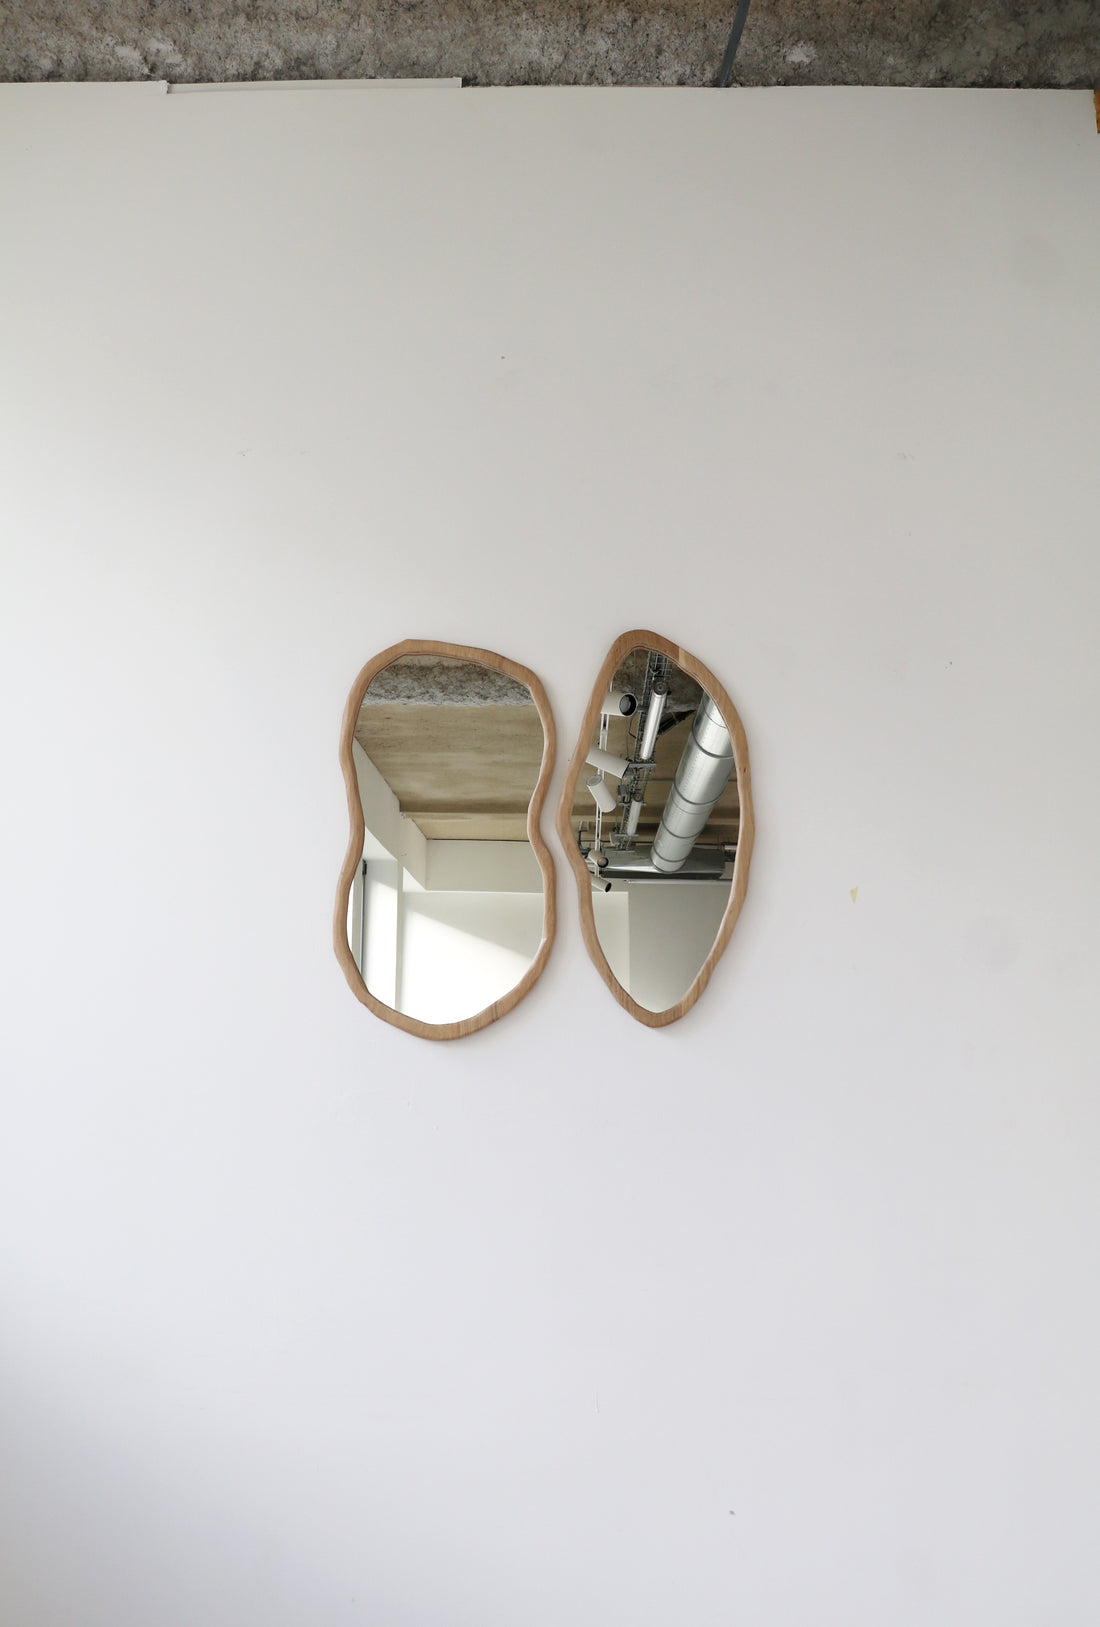 Miroirs Rencontre Large Alice Lahana Studio